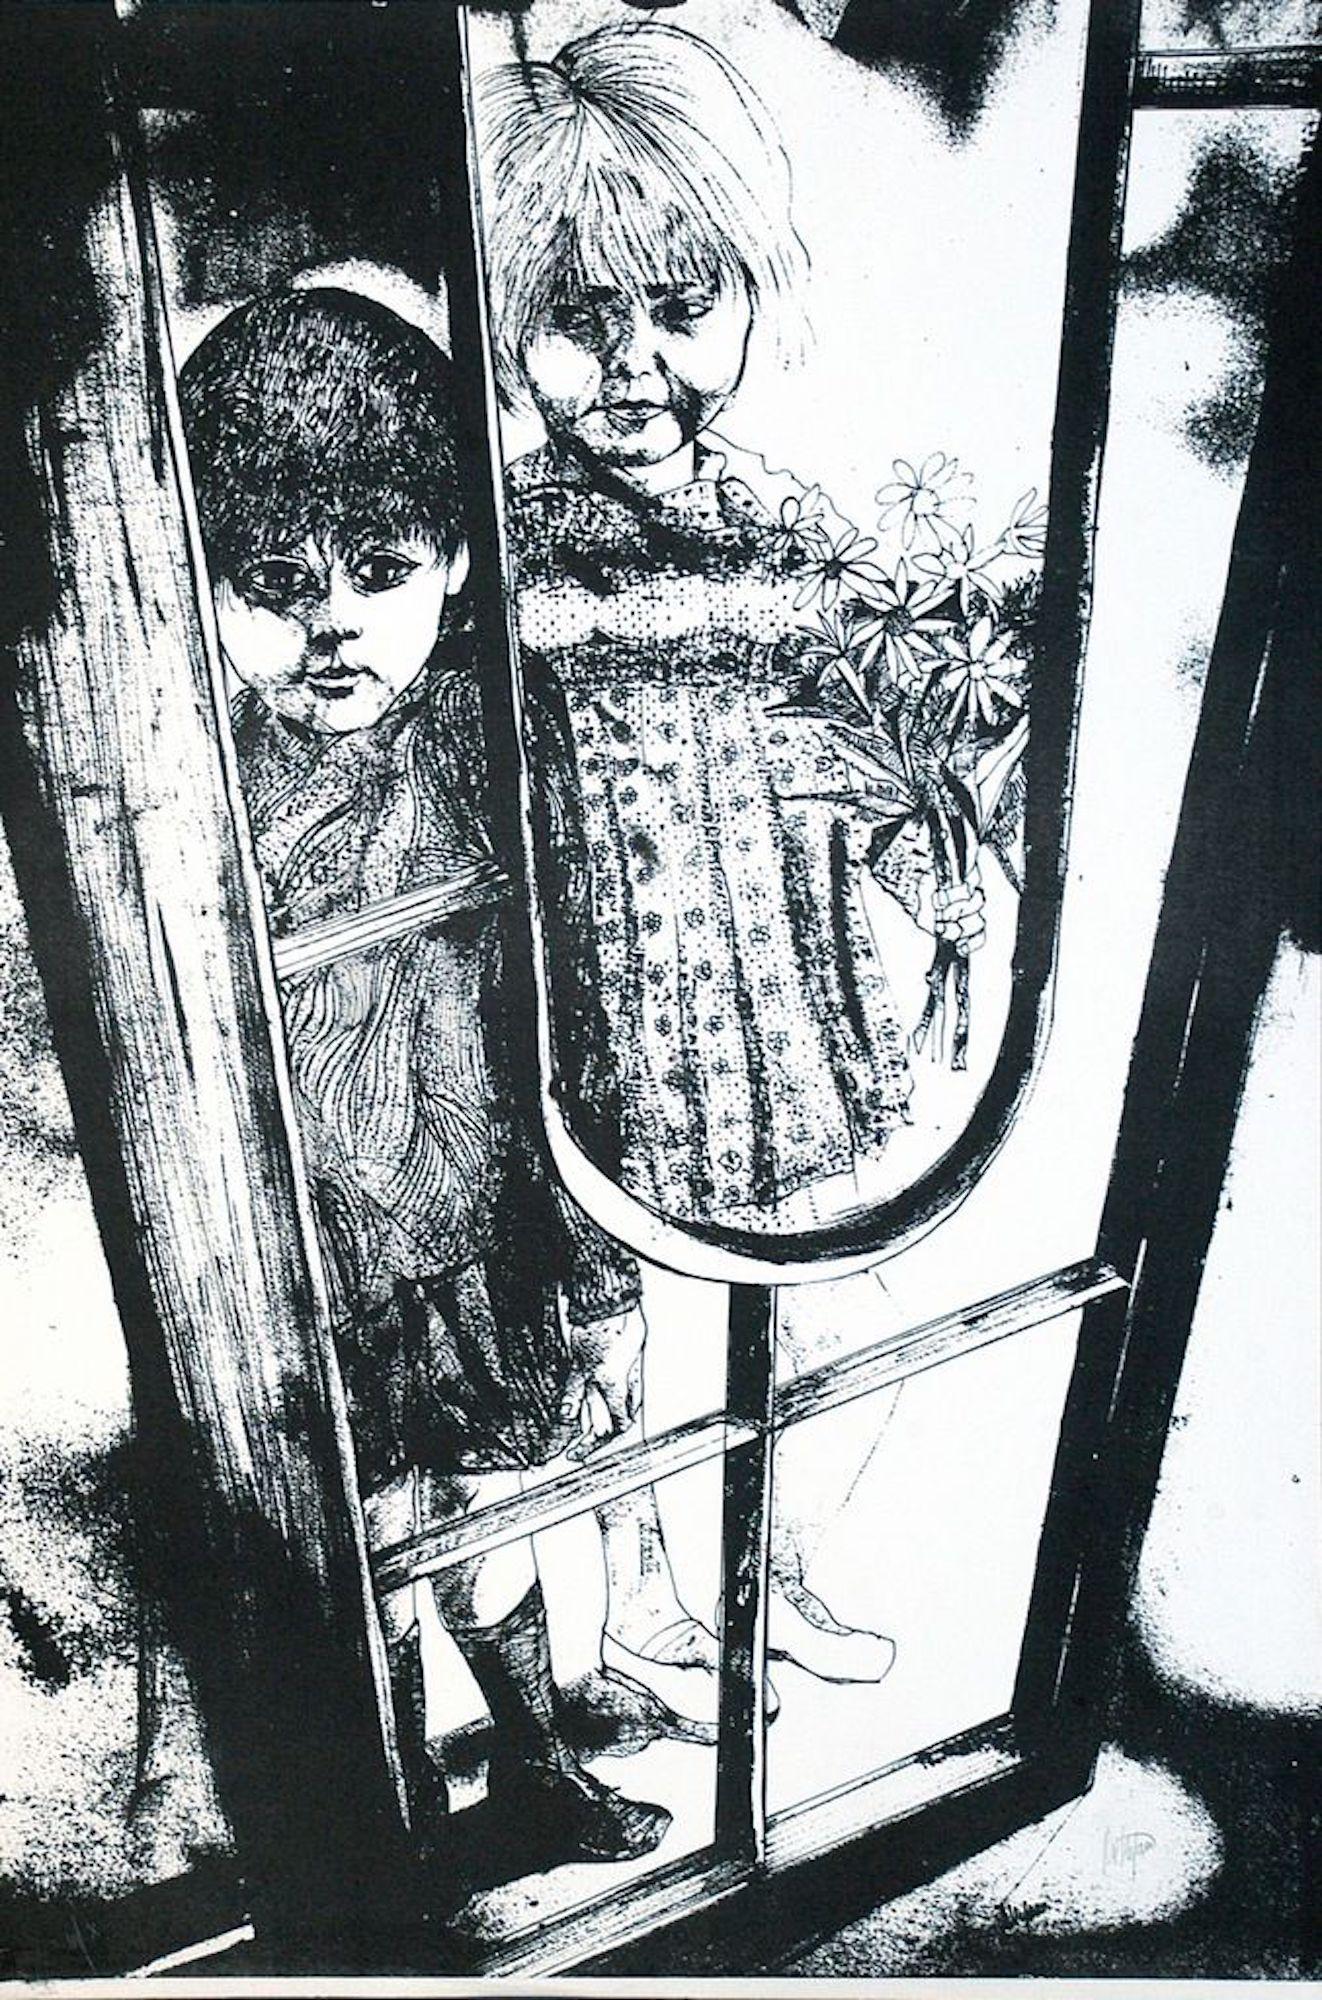 Gabriele De Stefano Figurative Print - Children - Original Lithograph by G. De Stefano - 1970 ca.